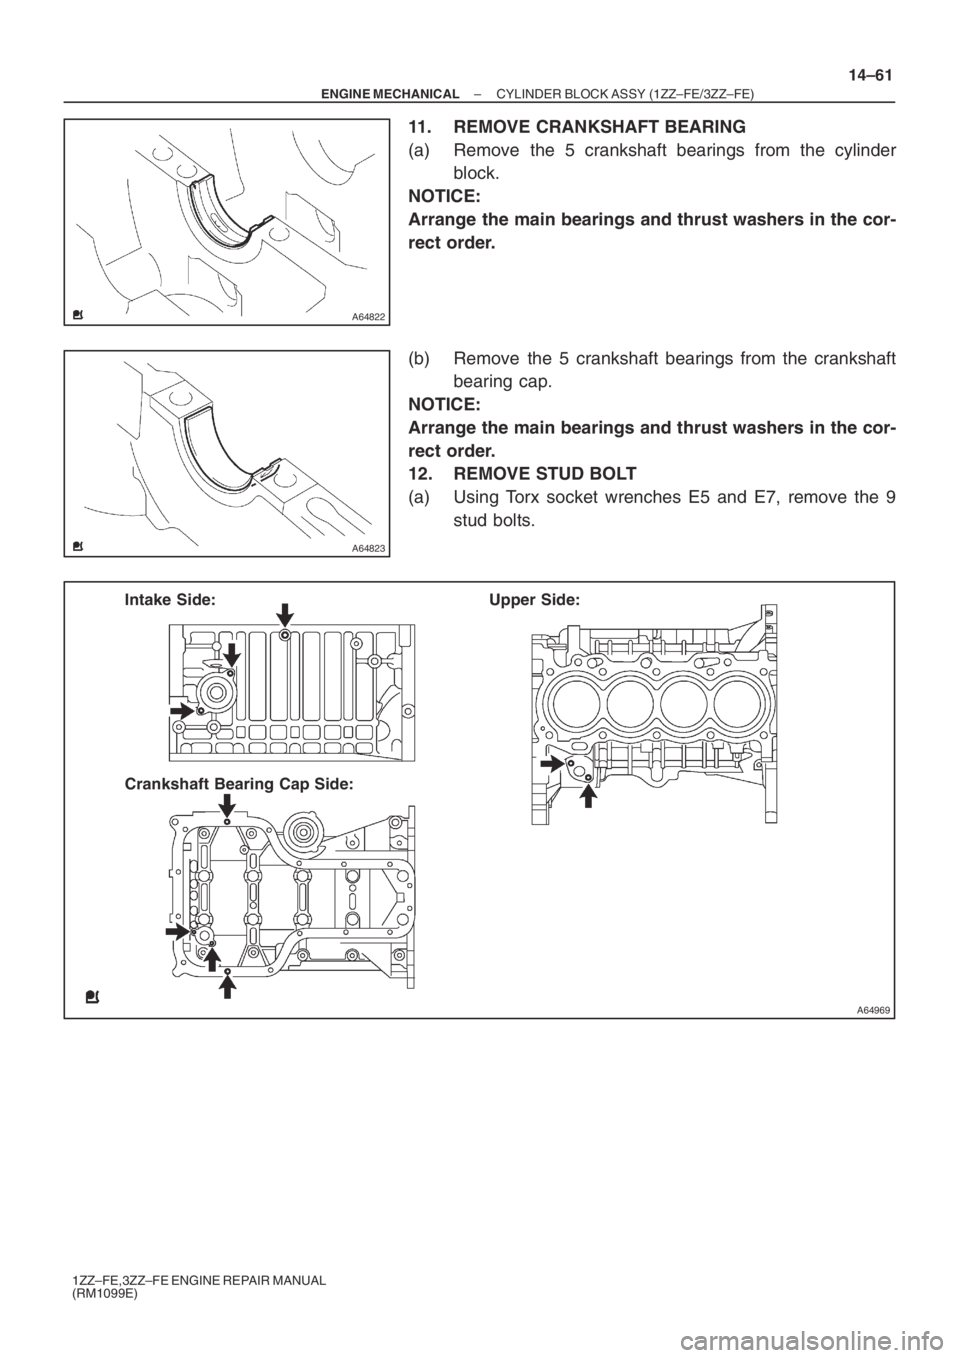 TOYOTA AVENSIS 2005  Service Repair Manual A64822
A64823
A64969
Crankshaft Bearing Cap Side: Intake Side: Upper Side:
– ENGINE MECHANICALCYLINDER BLOCK ASSY (1ZZ–FE/3ZZ–FE)
14–61
1ZZ–FE,3ZZ–FE ENGINE REPAIR MANUAL
(RM1099E)
11. REM